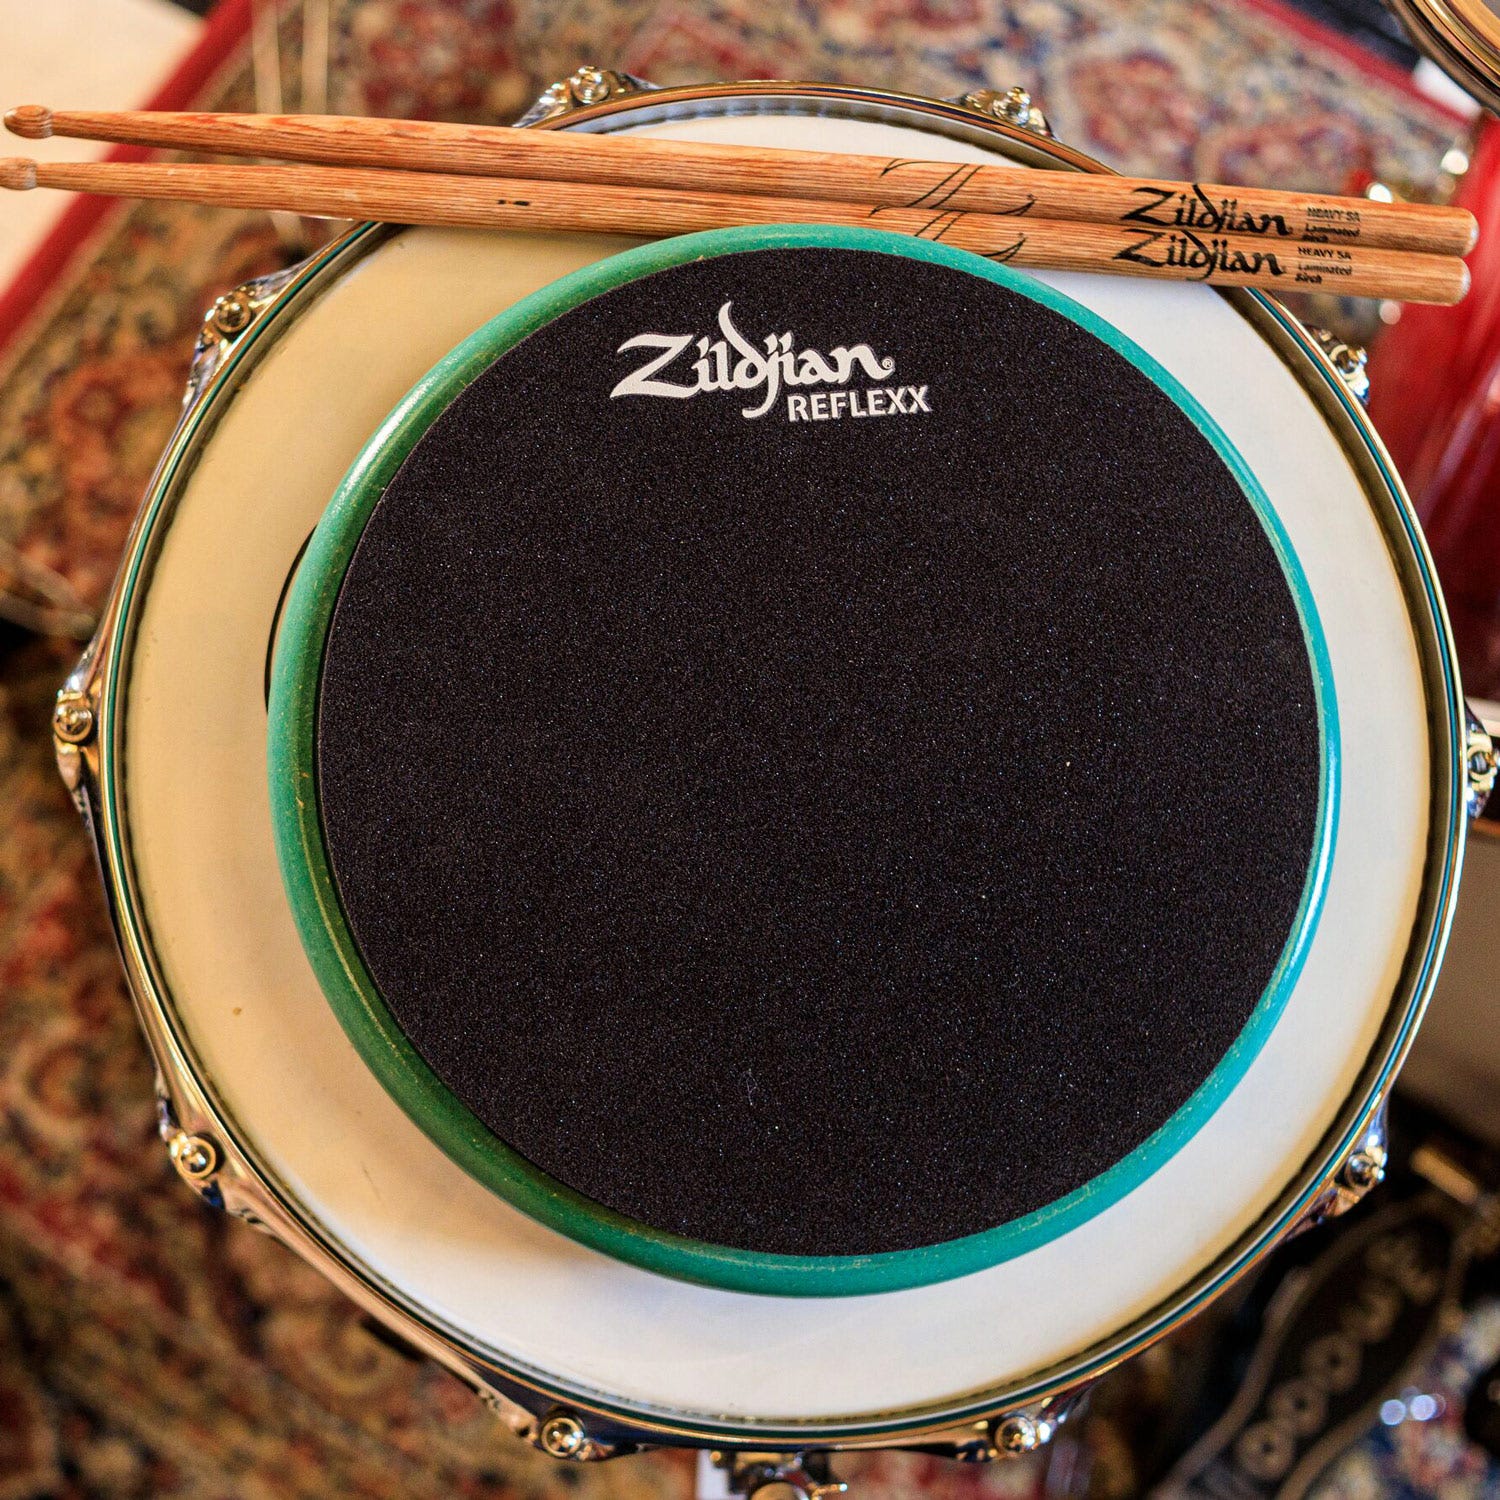 Green Zildjian Reflexx pad on snare drum